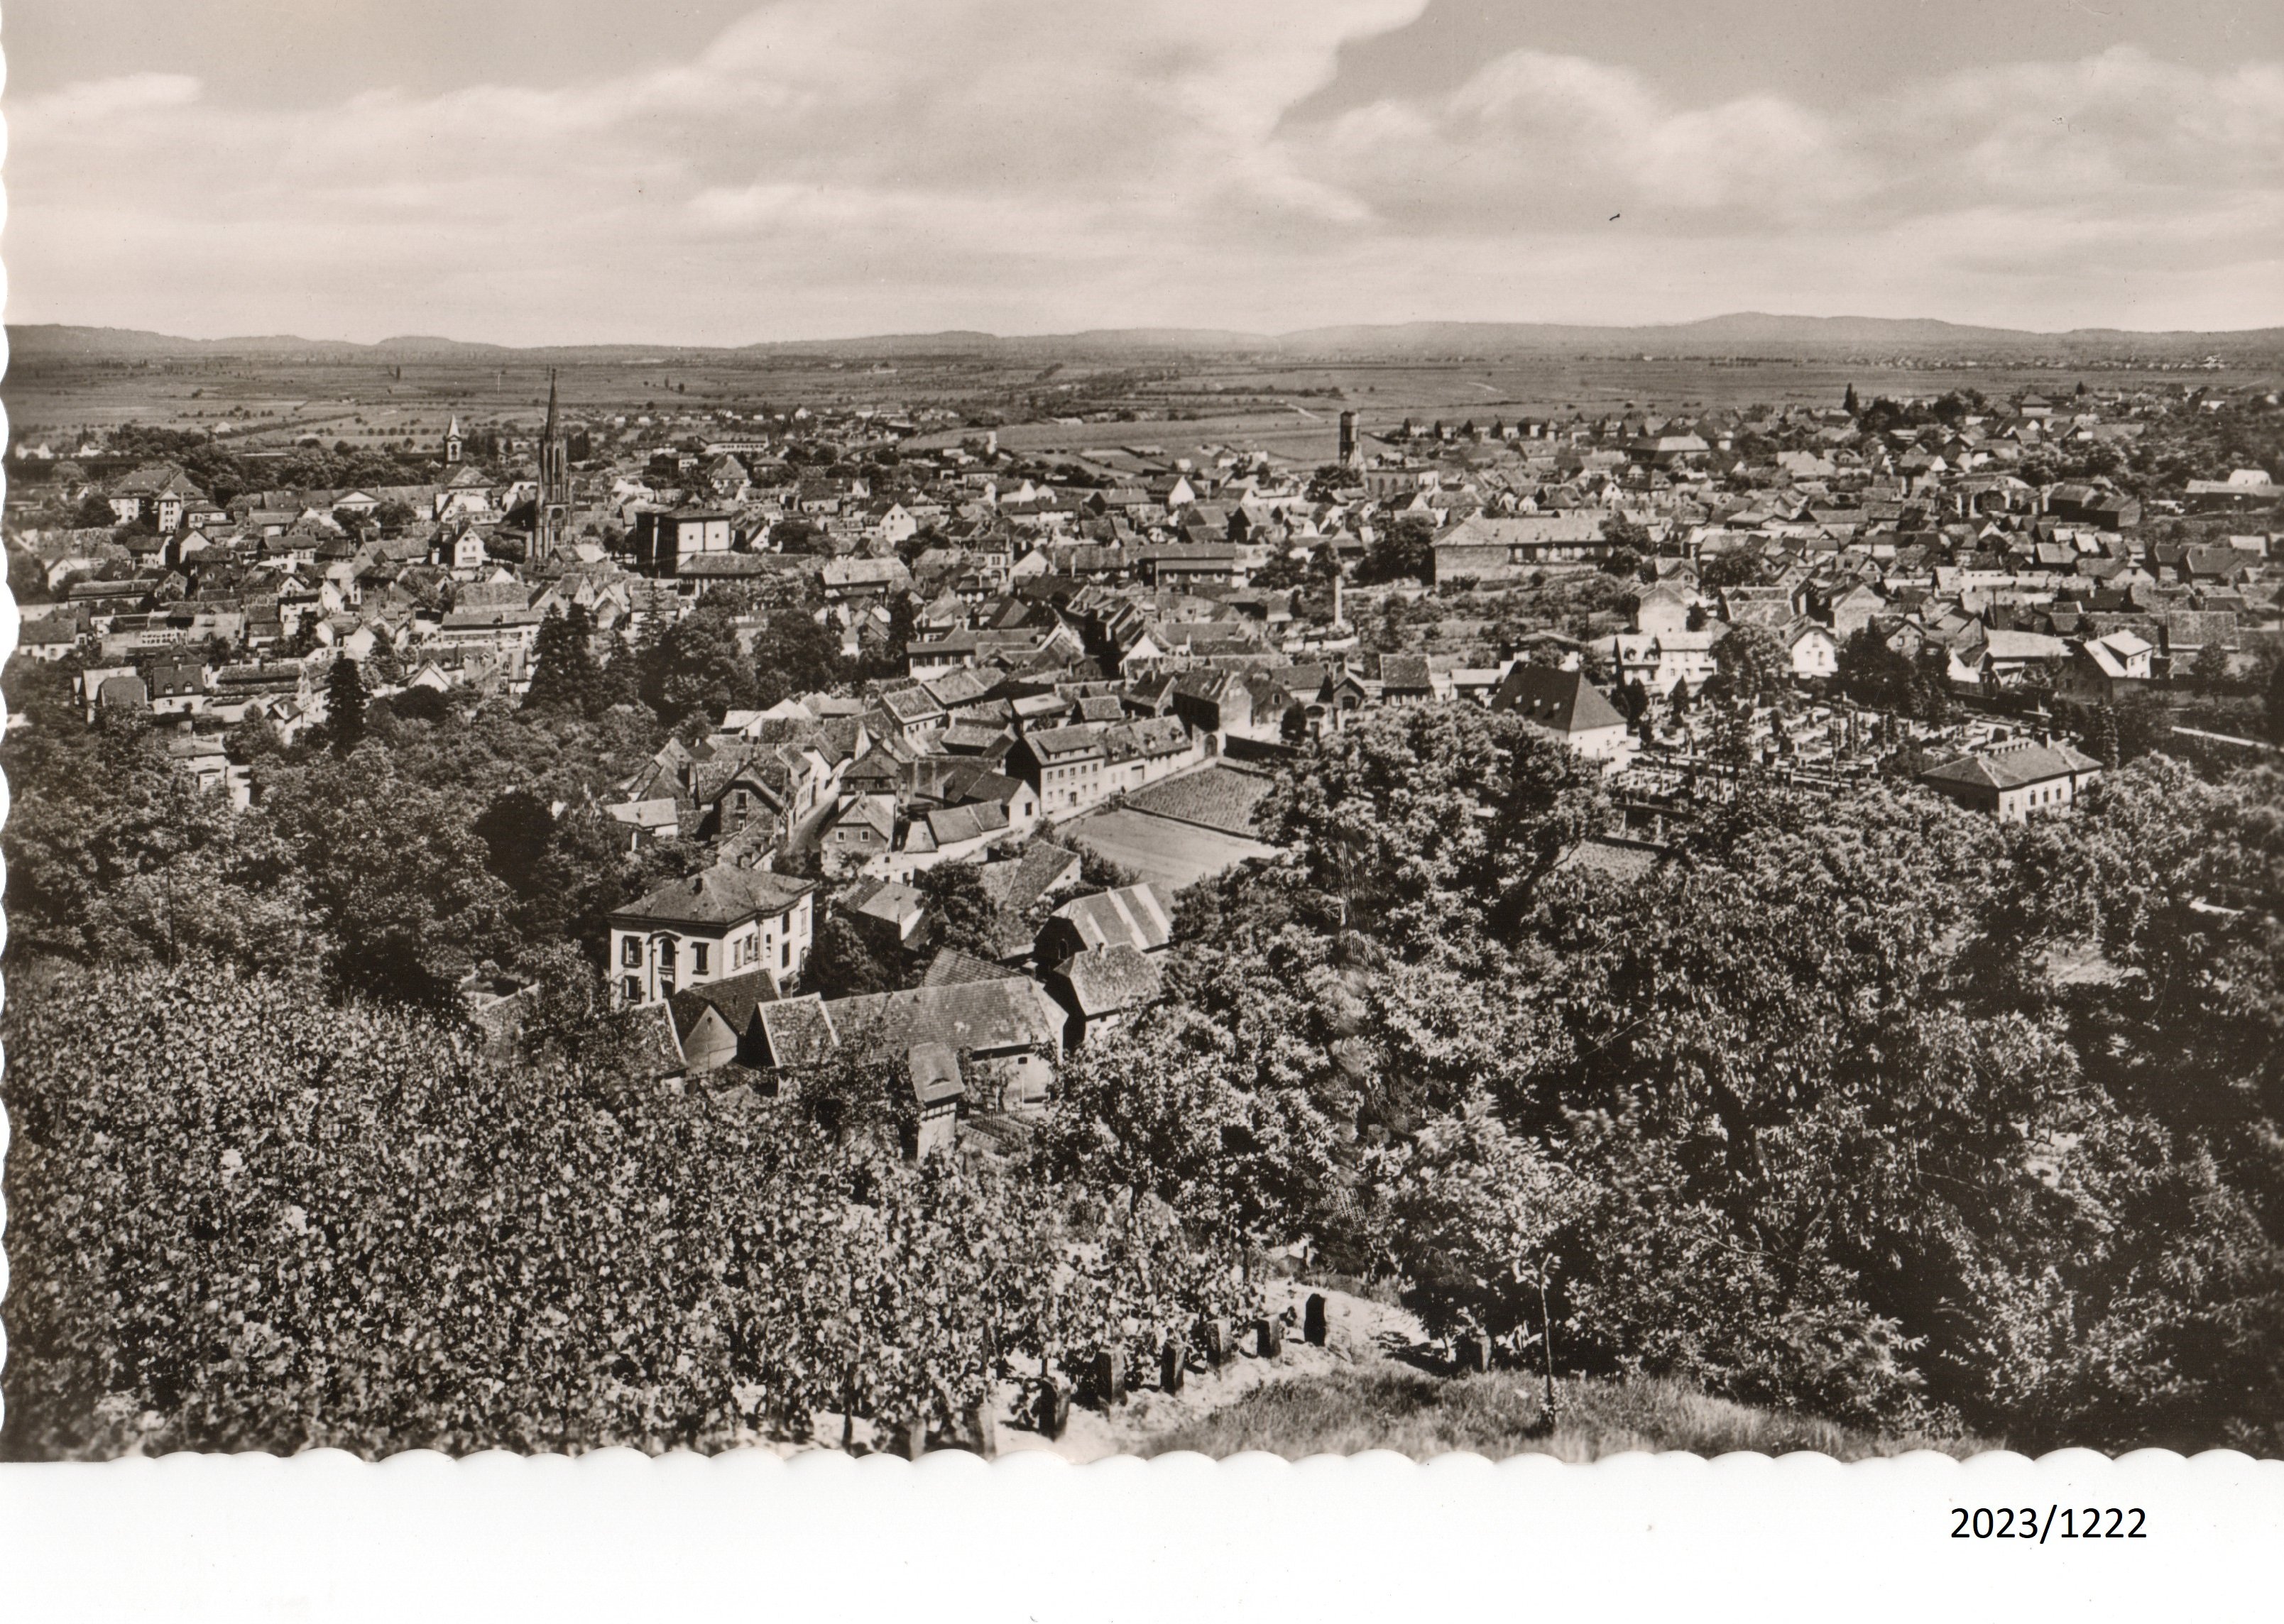 Bad Dürkheim, Überblick über die Stadt, 1950er Jahre (Stadtmuseum Bad Dürkheim im Kulturzentrum Haus Catoir CC BY-NC-SA)